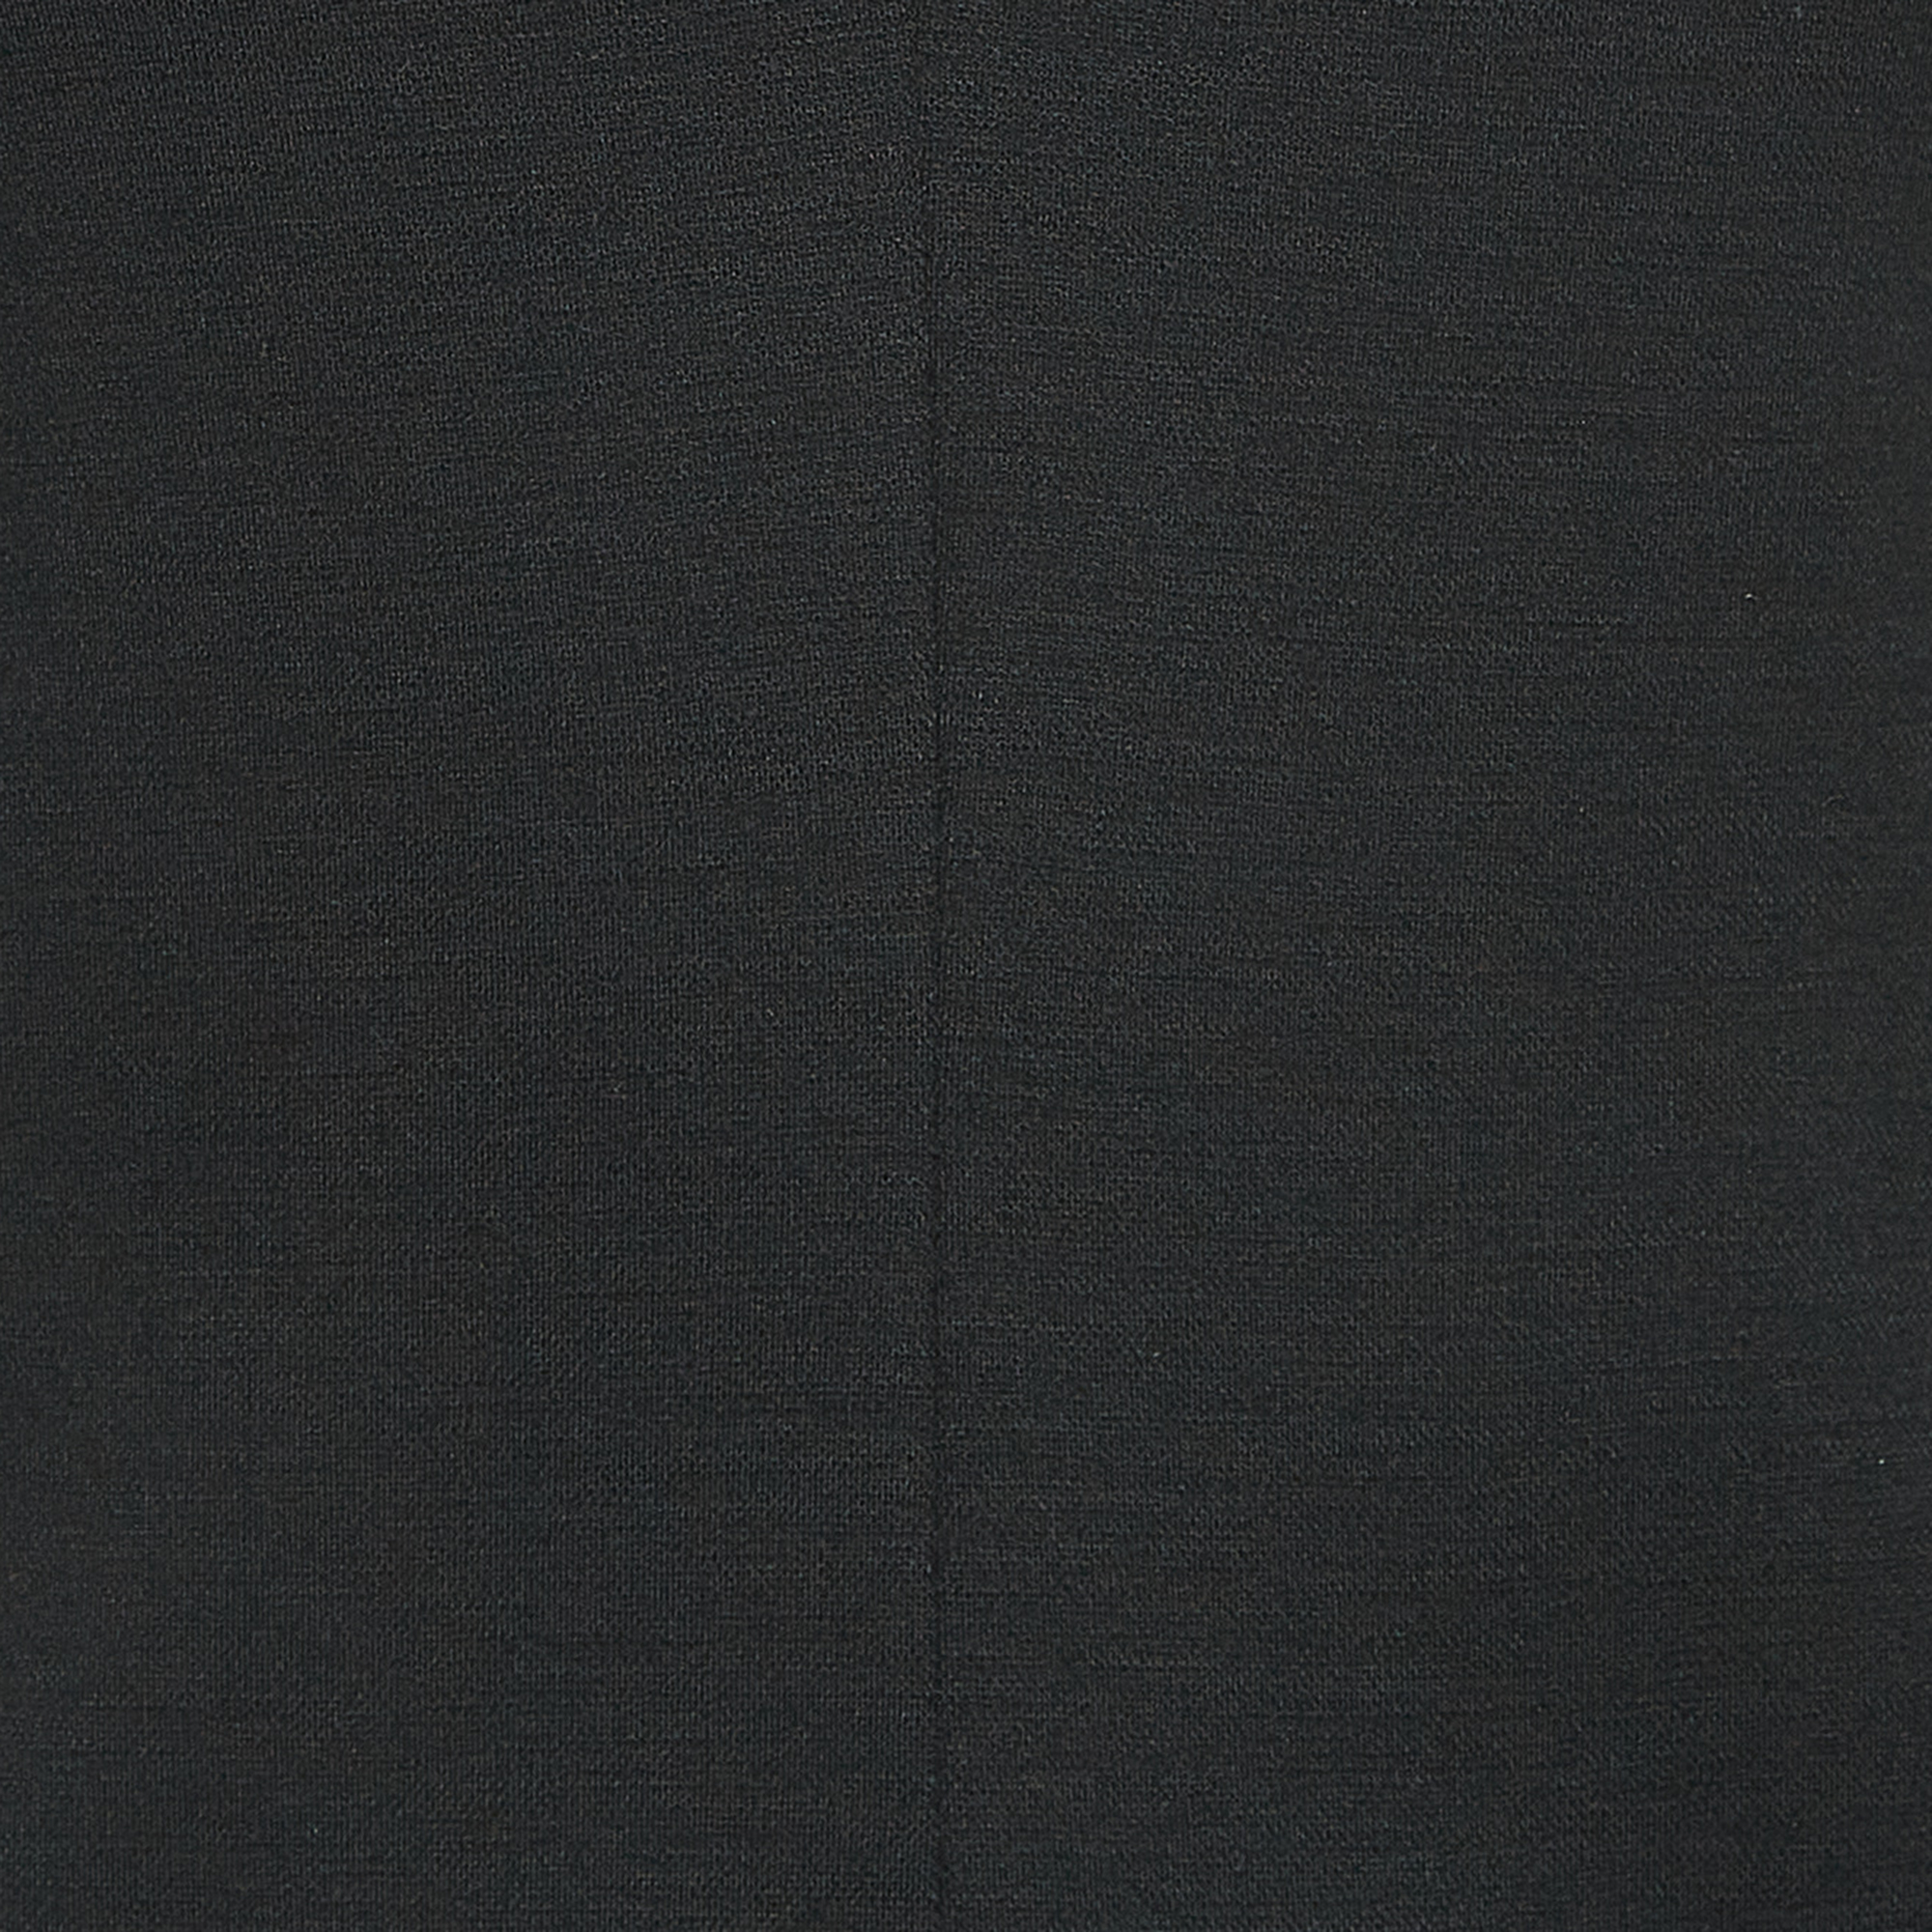 Diane Von Furstenberg Black Knit V-Neck Dress S